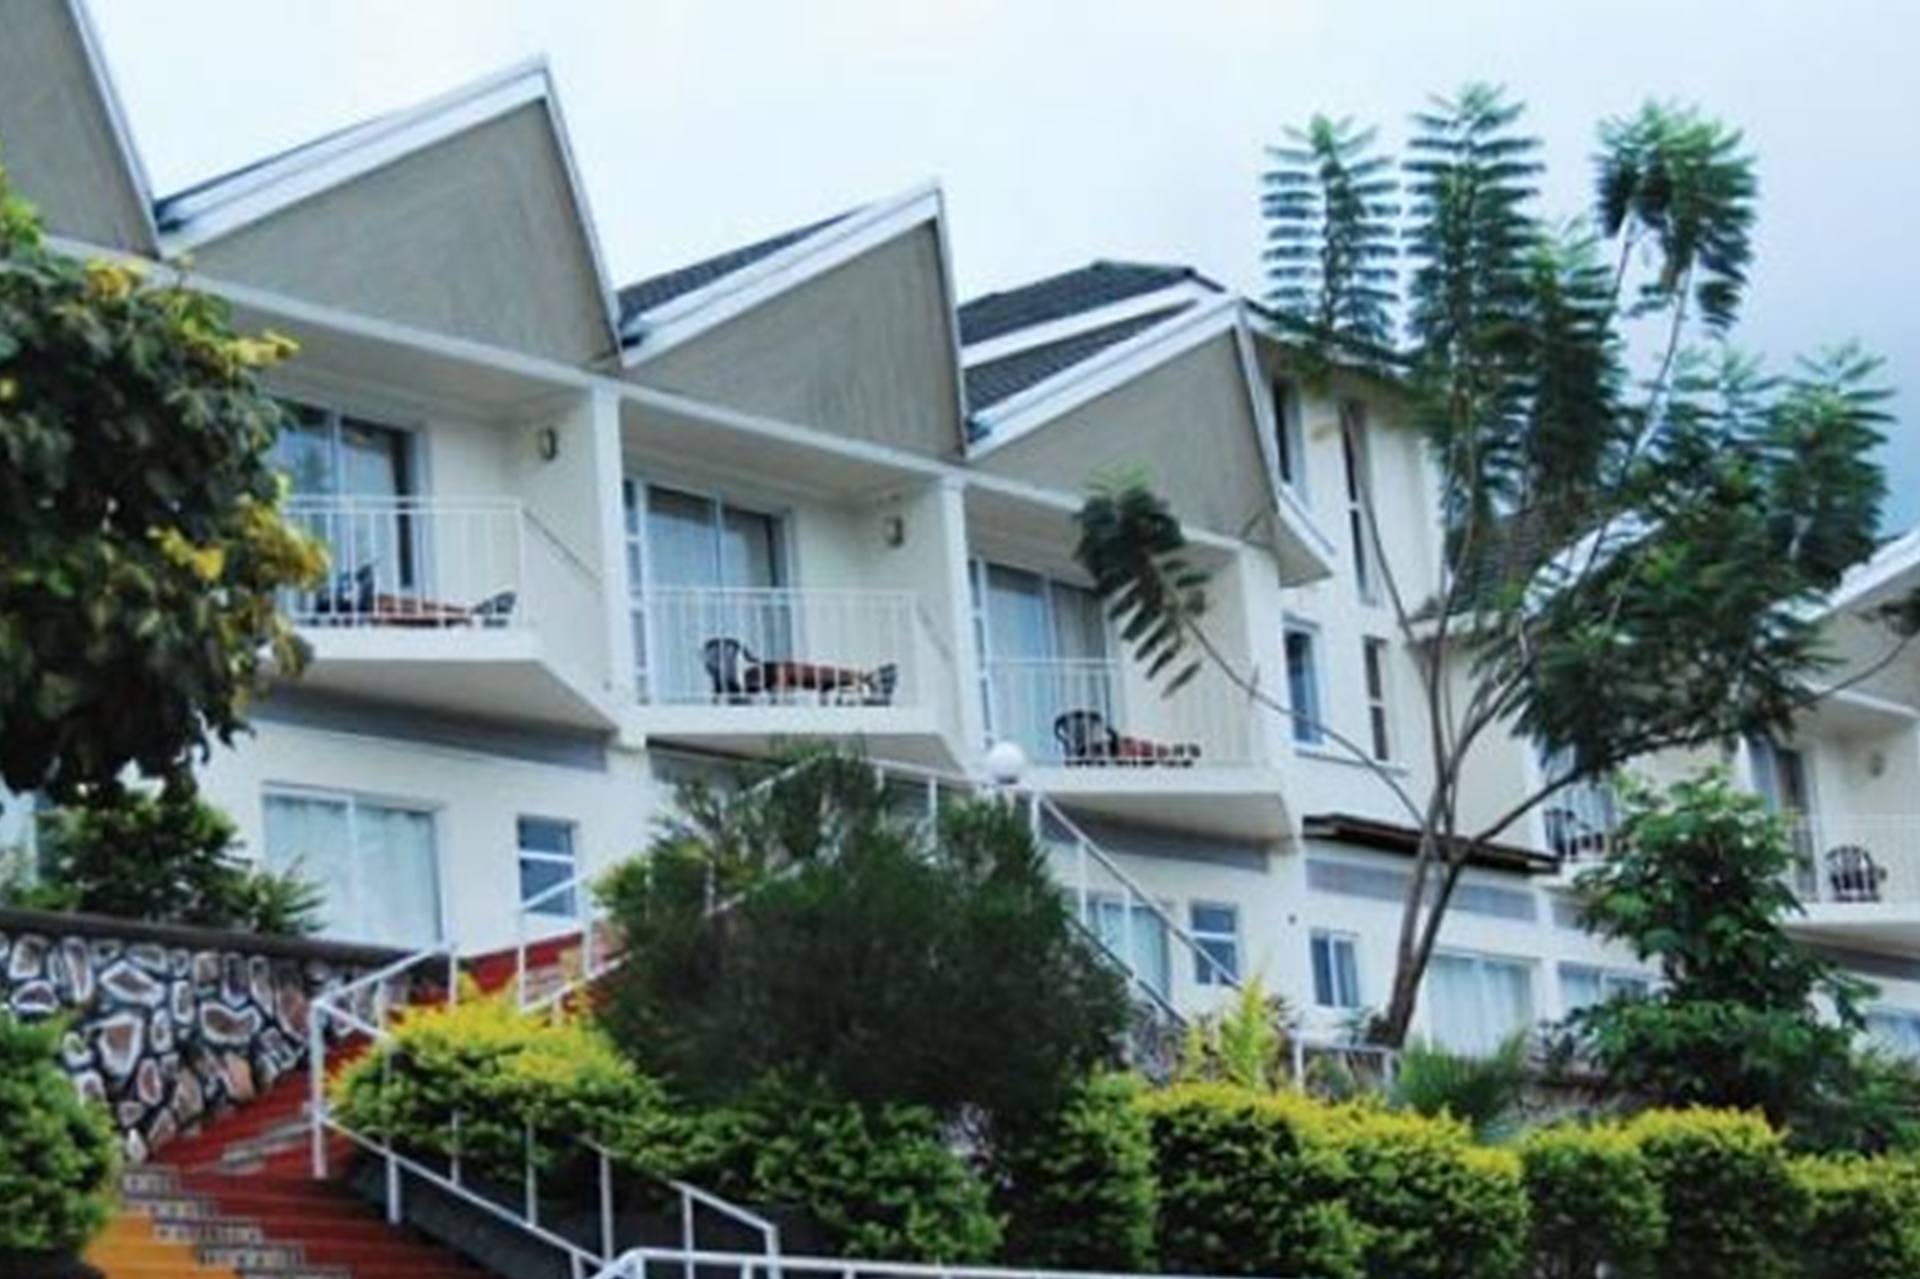 Springs International Hotel kasese - Kasese Hotels - accommodation in uganda